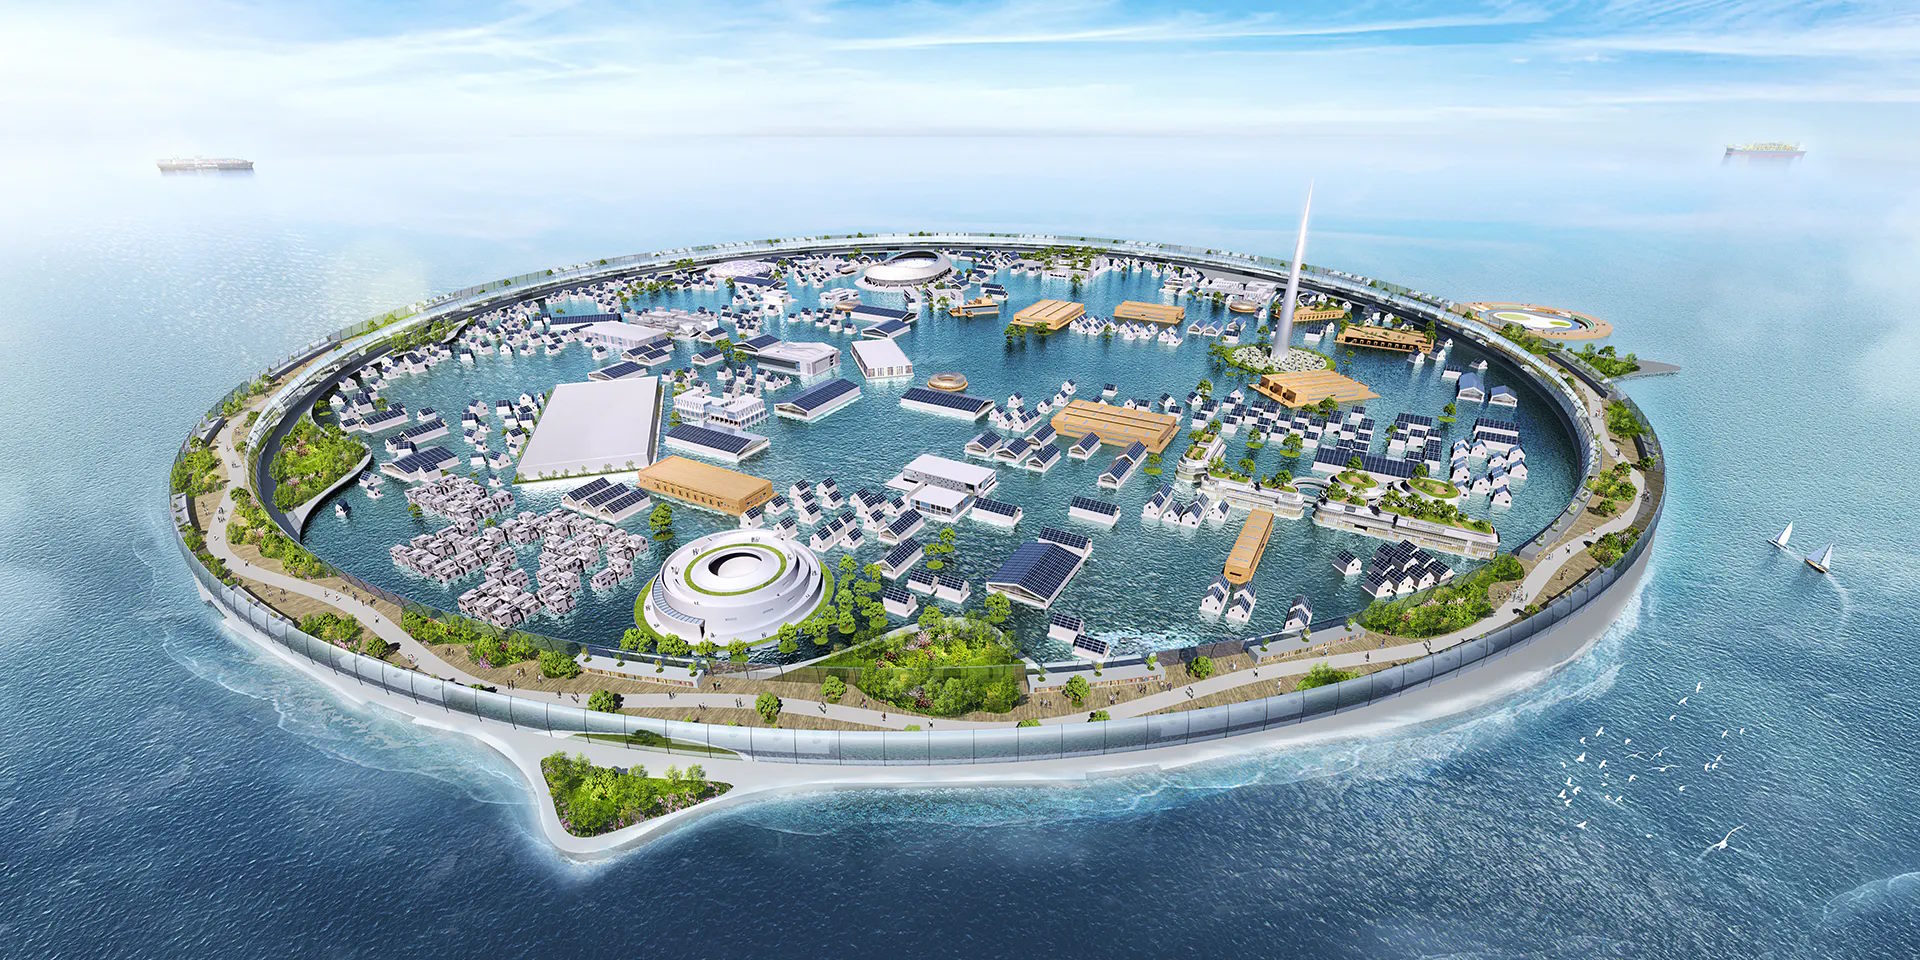 Dogen City, Japan’s futuristic floating city seeking self-sustainability.